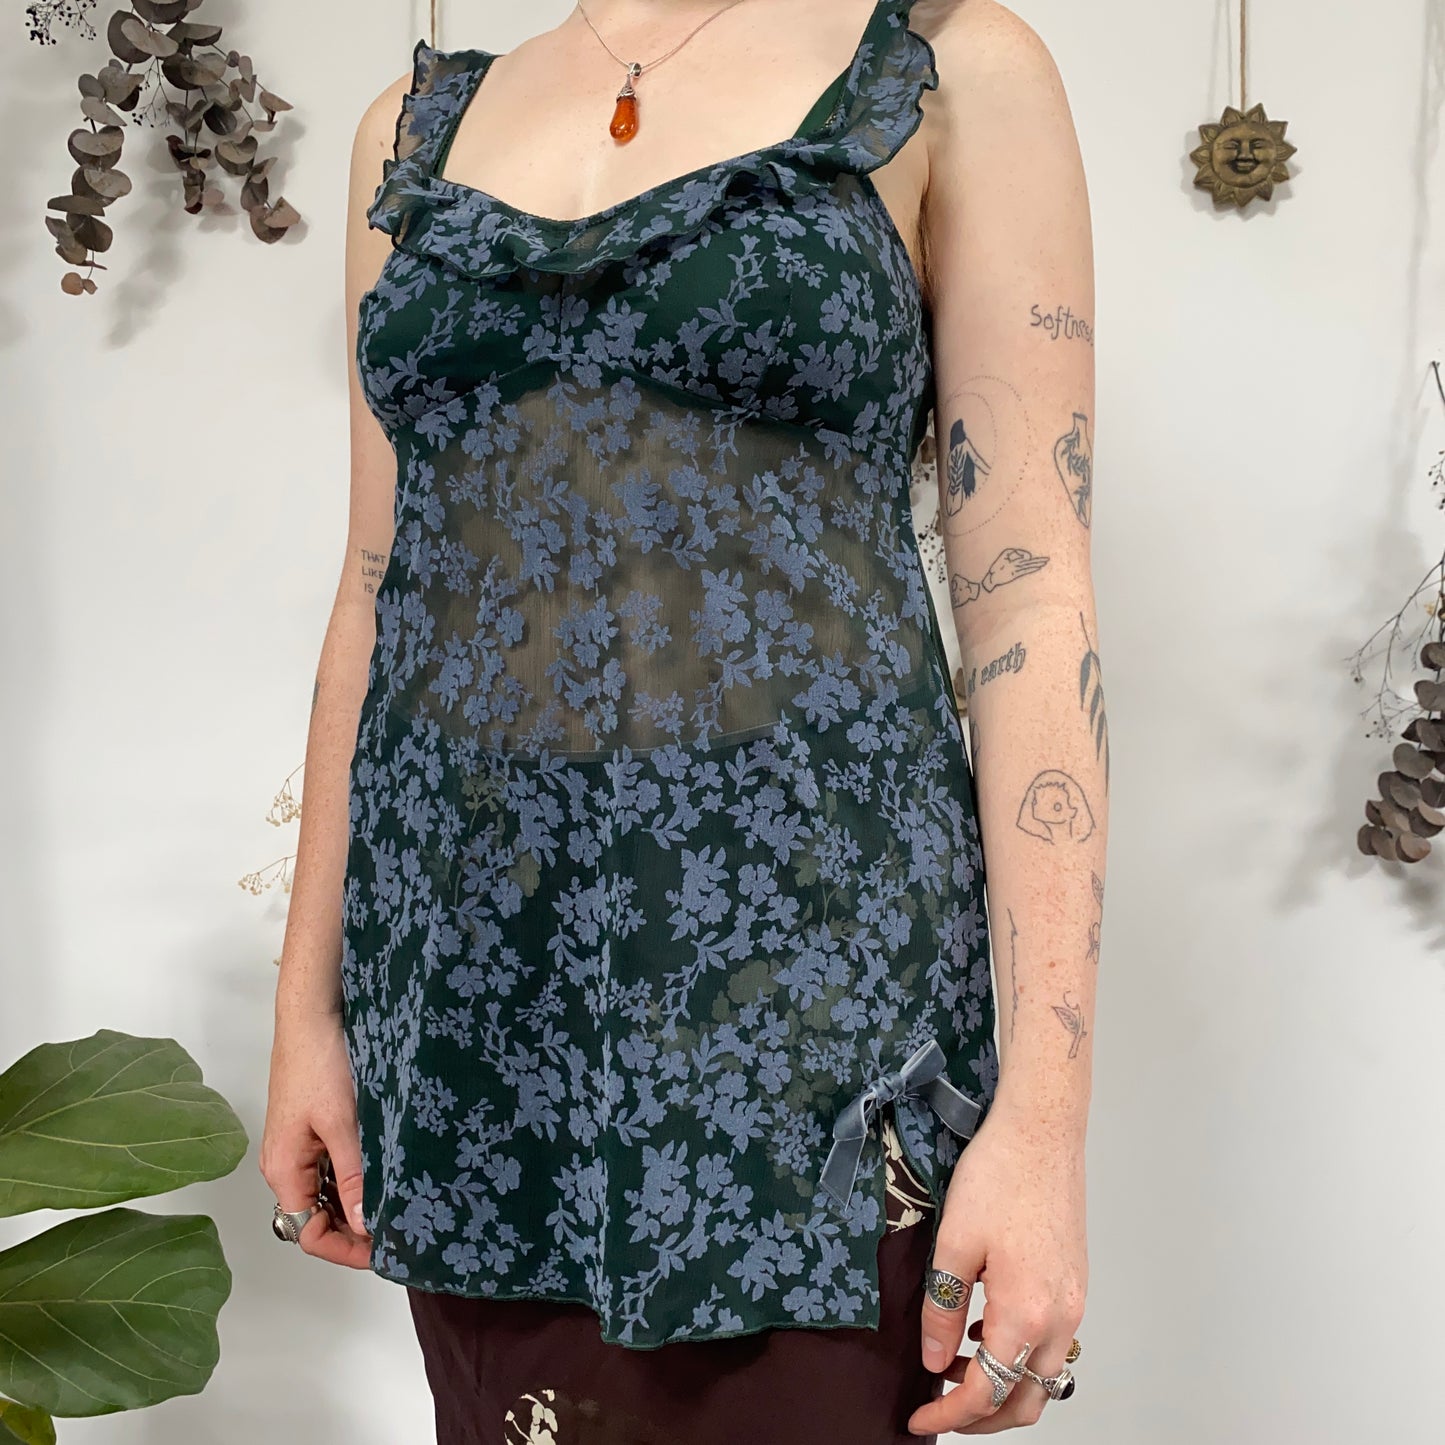 Green mesh dress/top - size 8/10